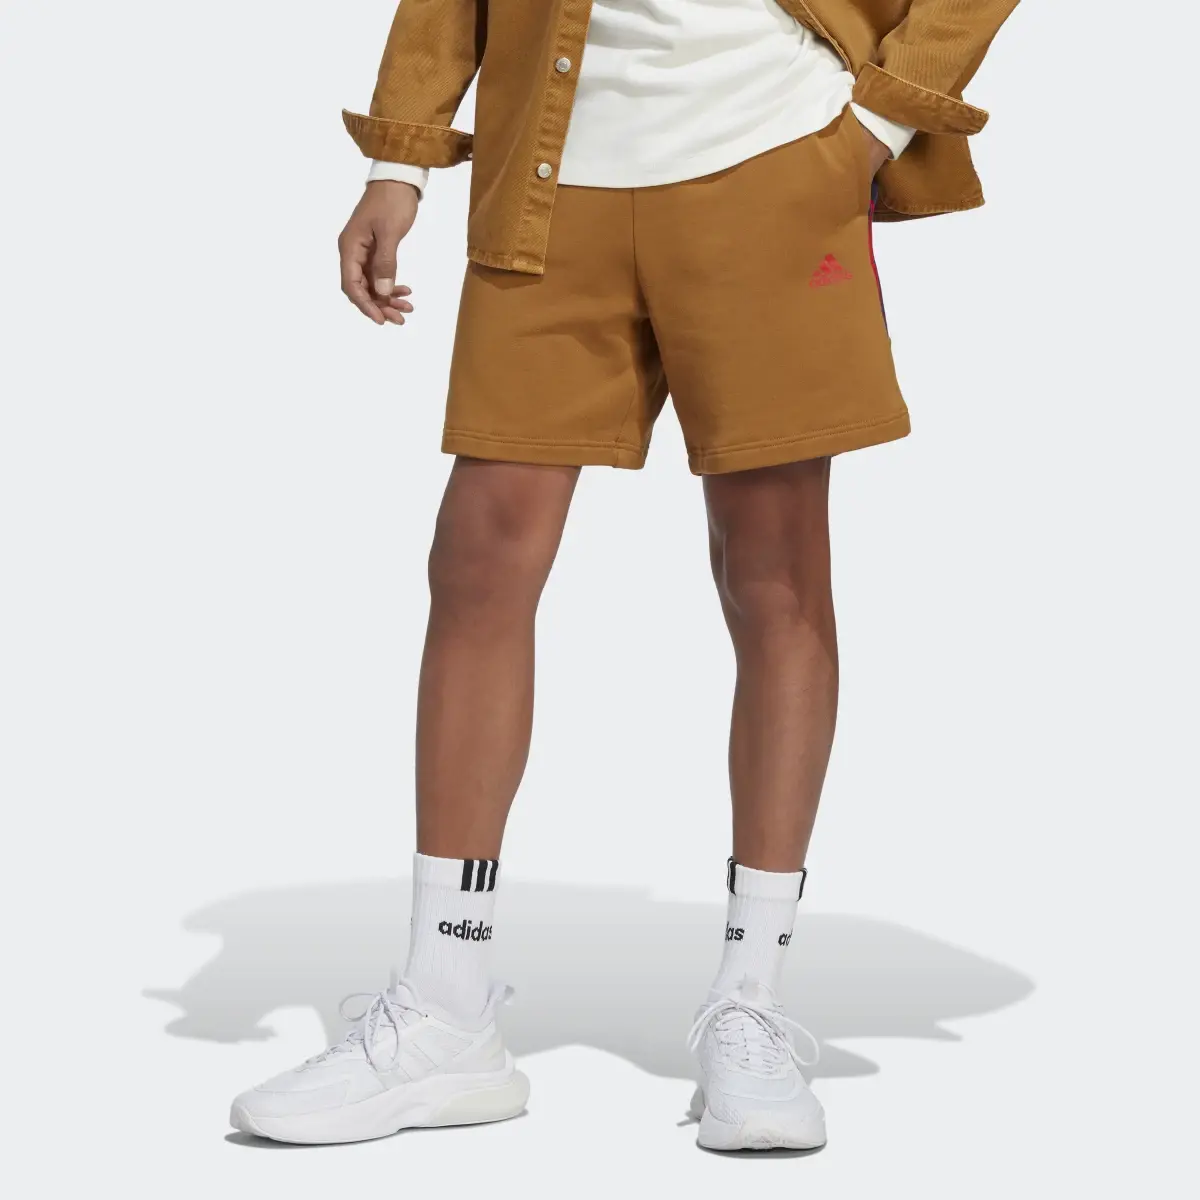 Adidas Brandlove Shorts. 1